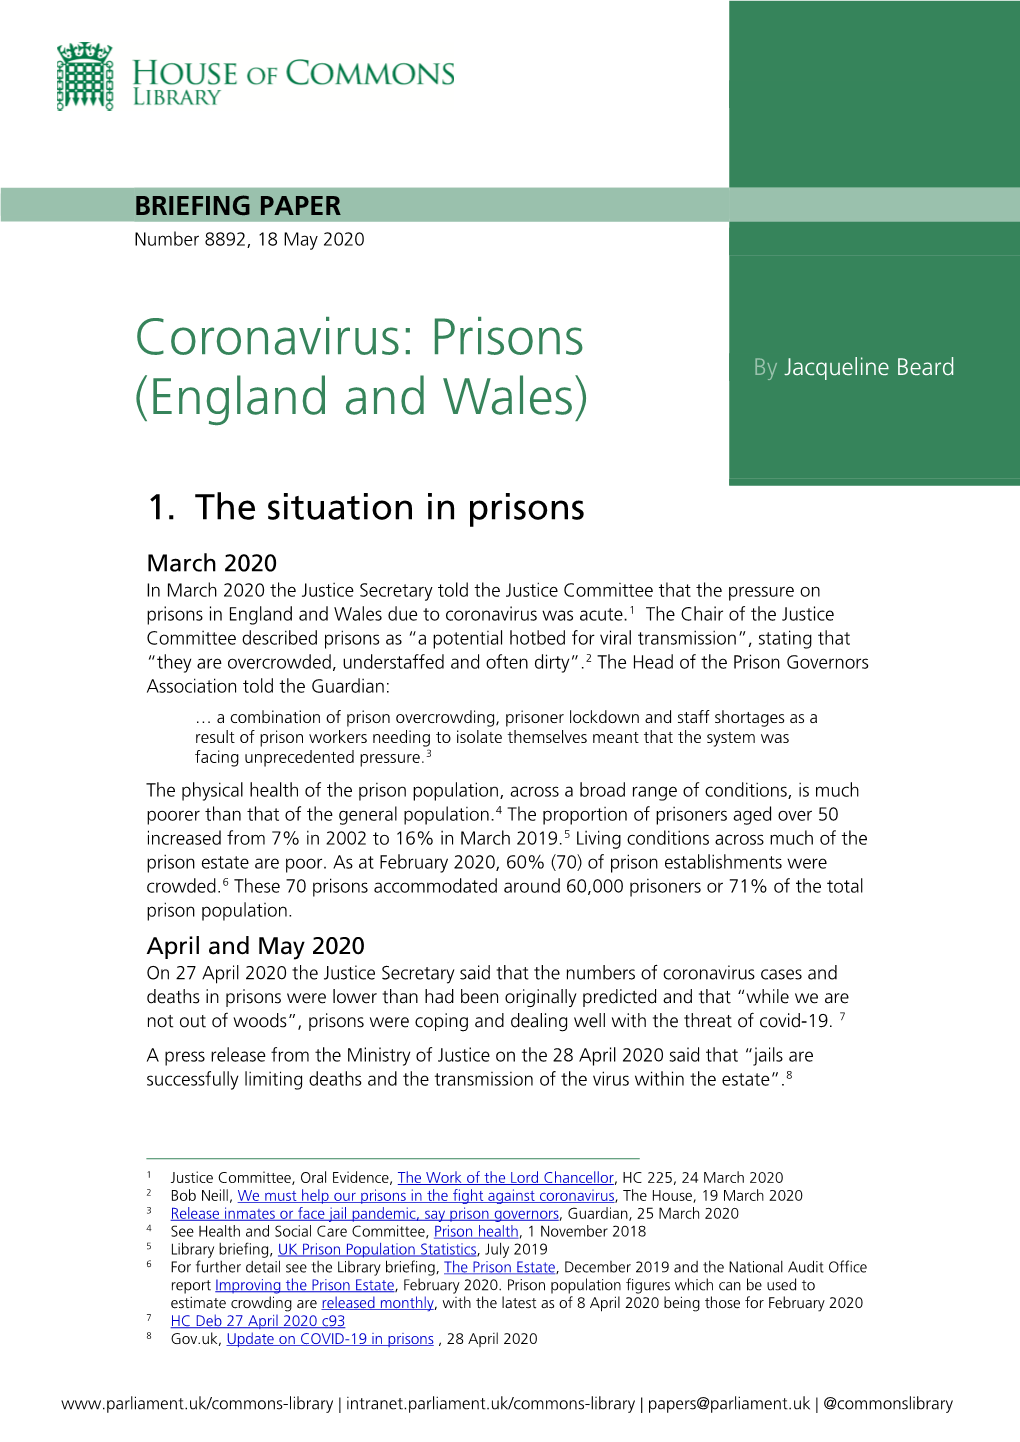 Coronavirus: Prisons (England and Wales)